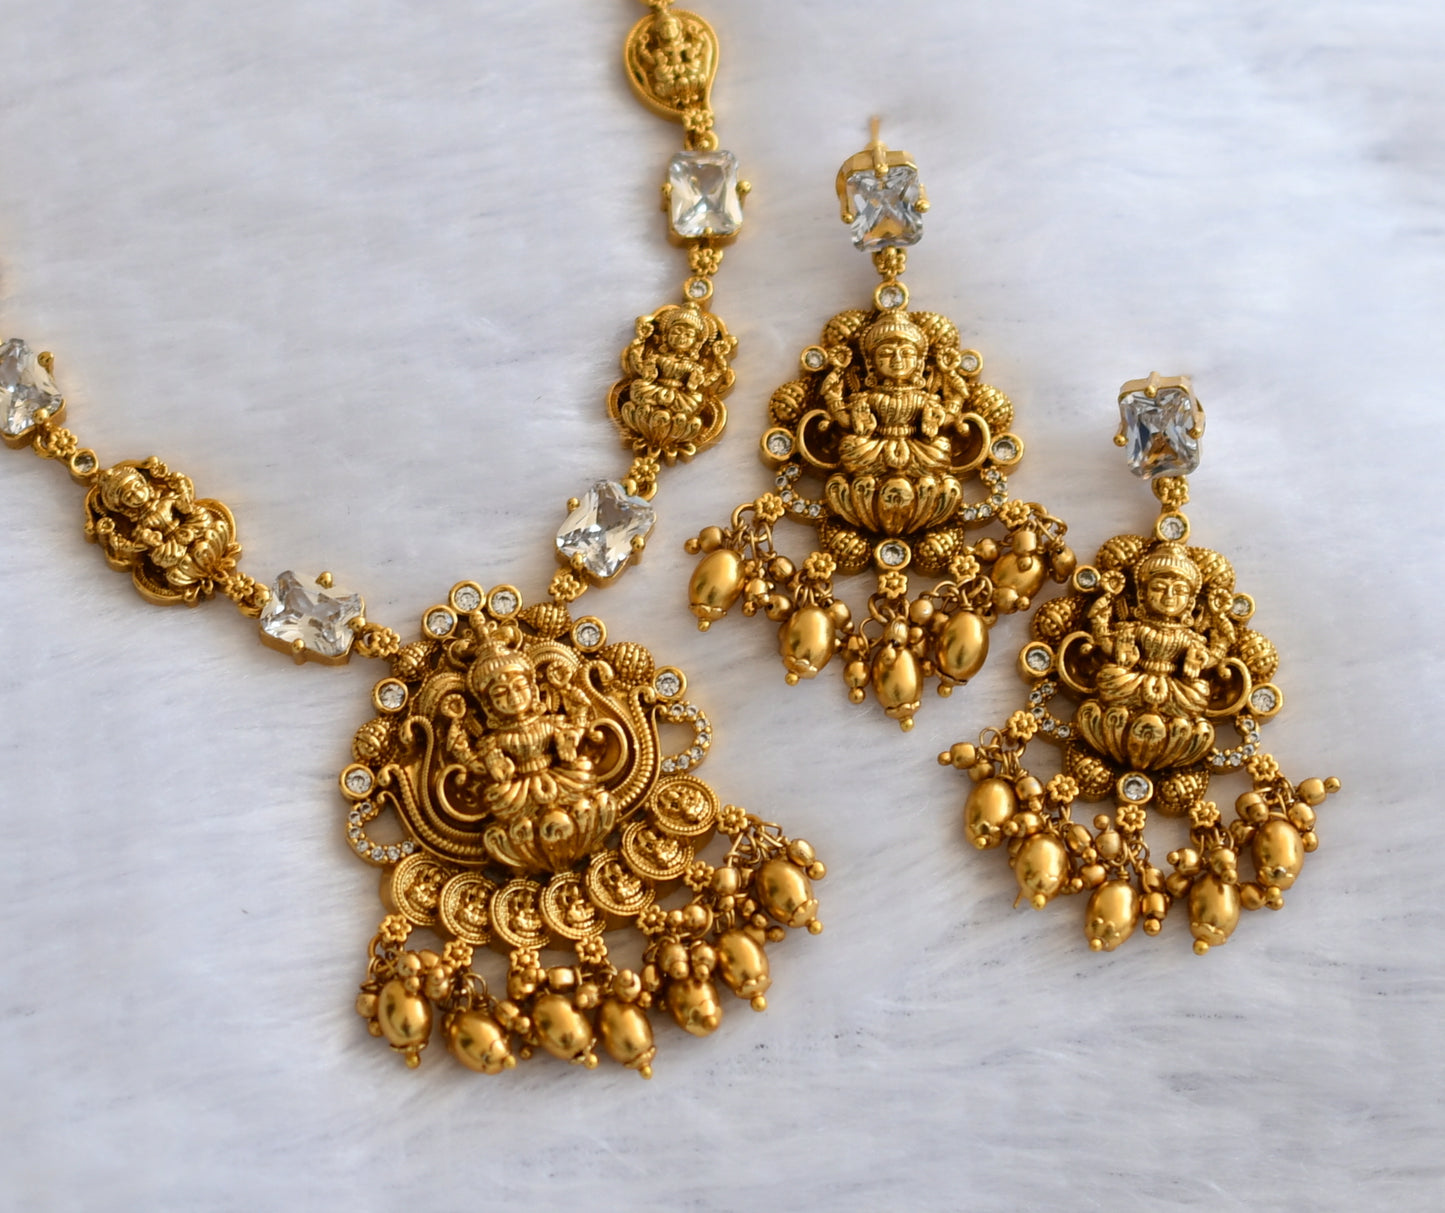 Antique gold tone cz white block stone lakshmi mango necklace set dj-46197